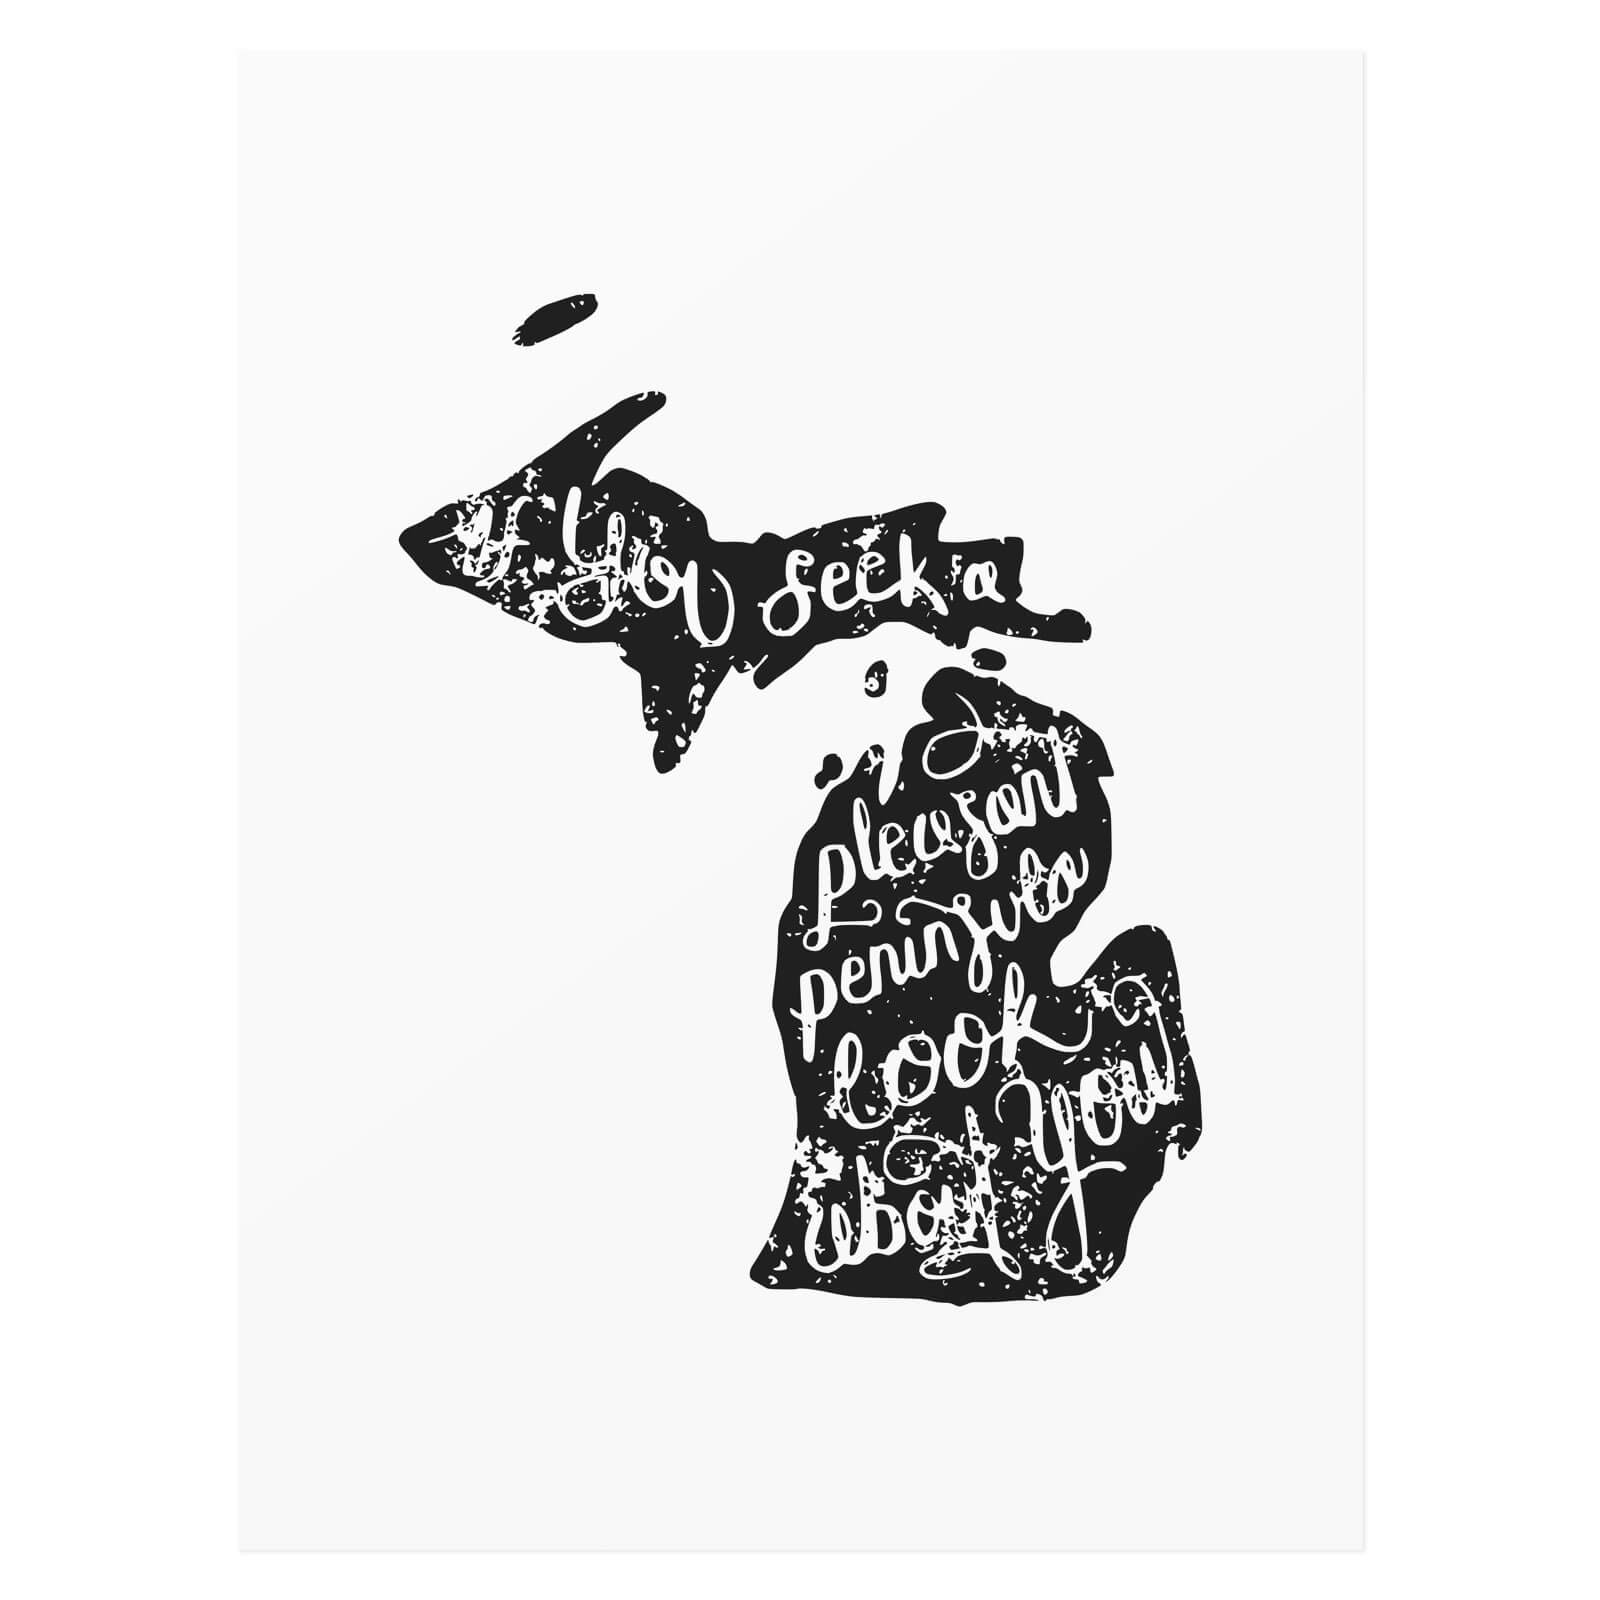 Michigan — If you seek a pleasant peninsula, look about you